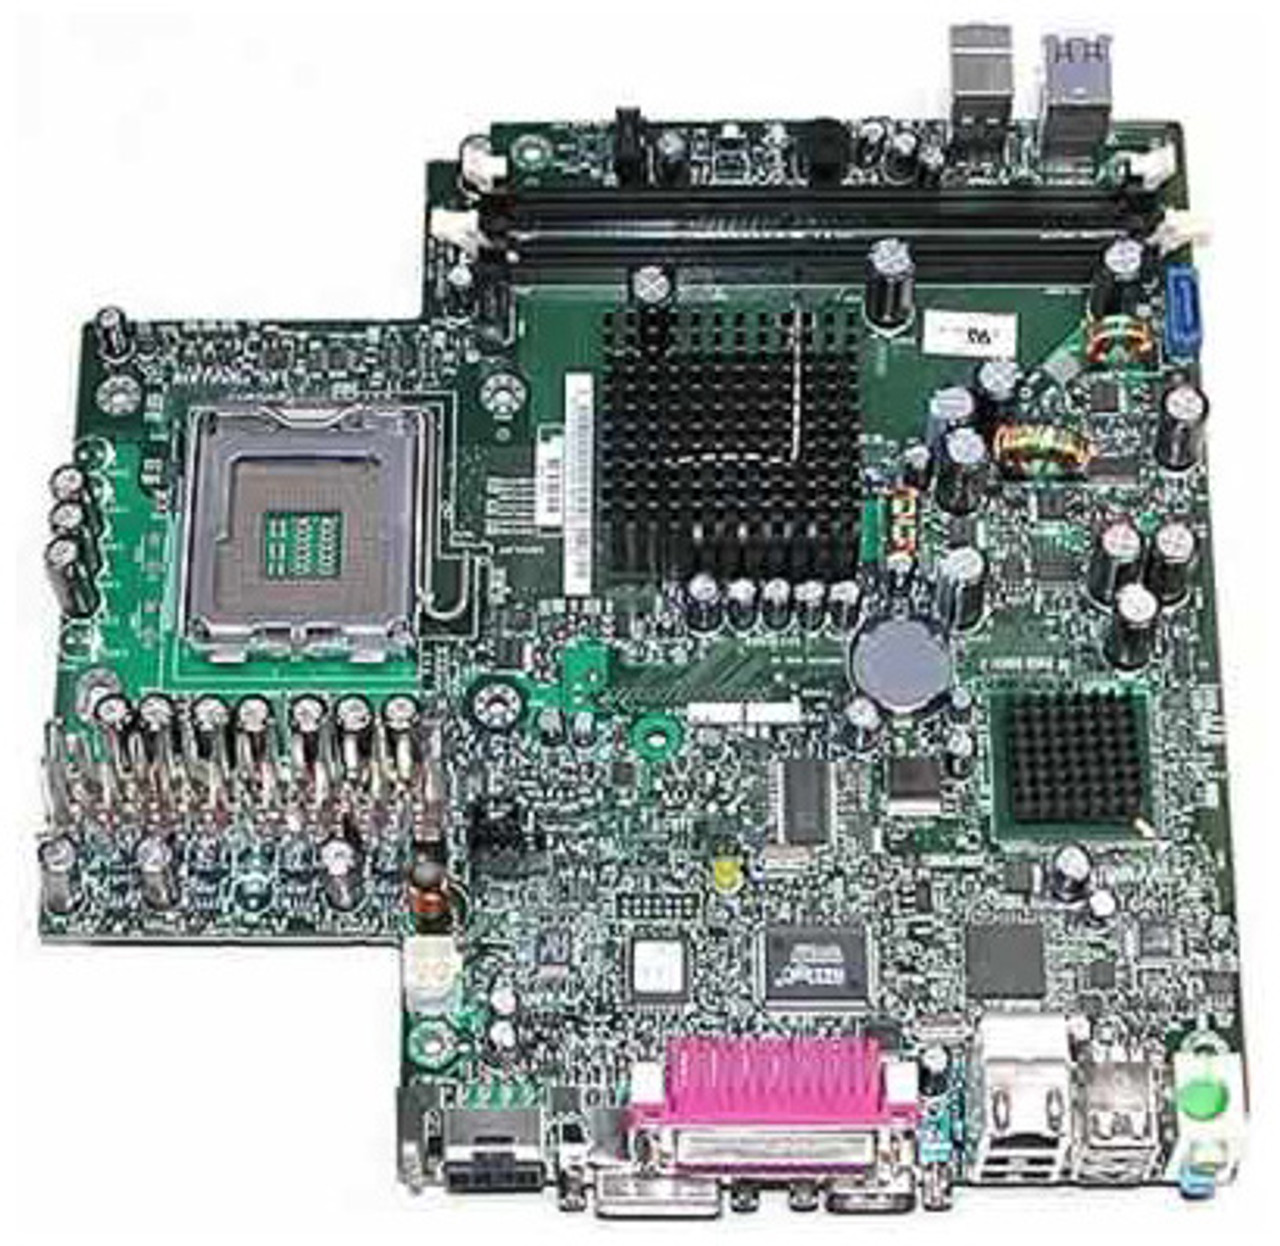 0C8065 - Dell System Board (Motherboard) for OptiPlex SX280 (Refurbished)